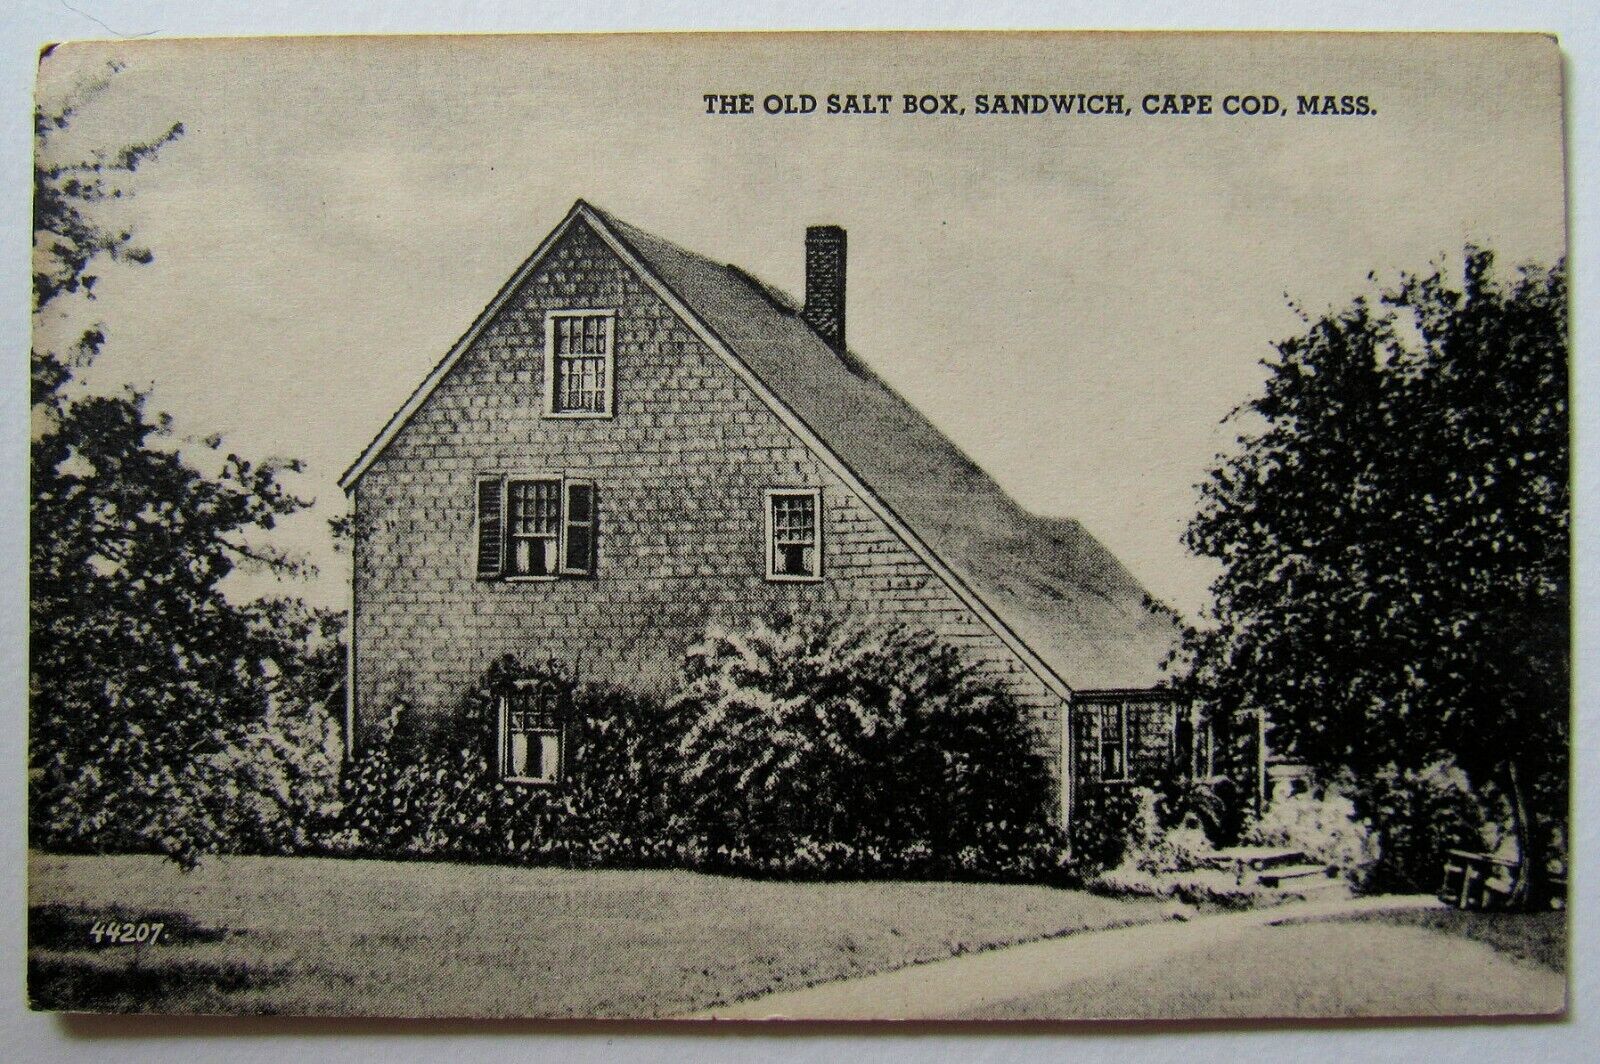 Cape Cod Sandwich Shawme Lake Old Salt Box House Postcard 1943 Mass.